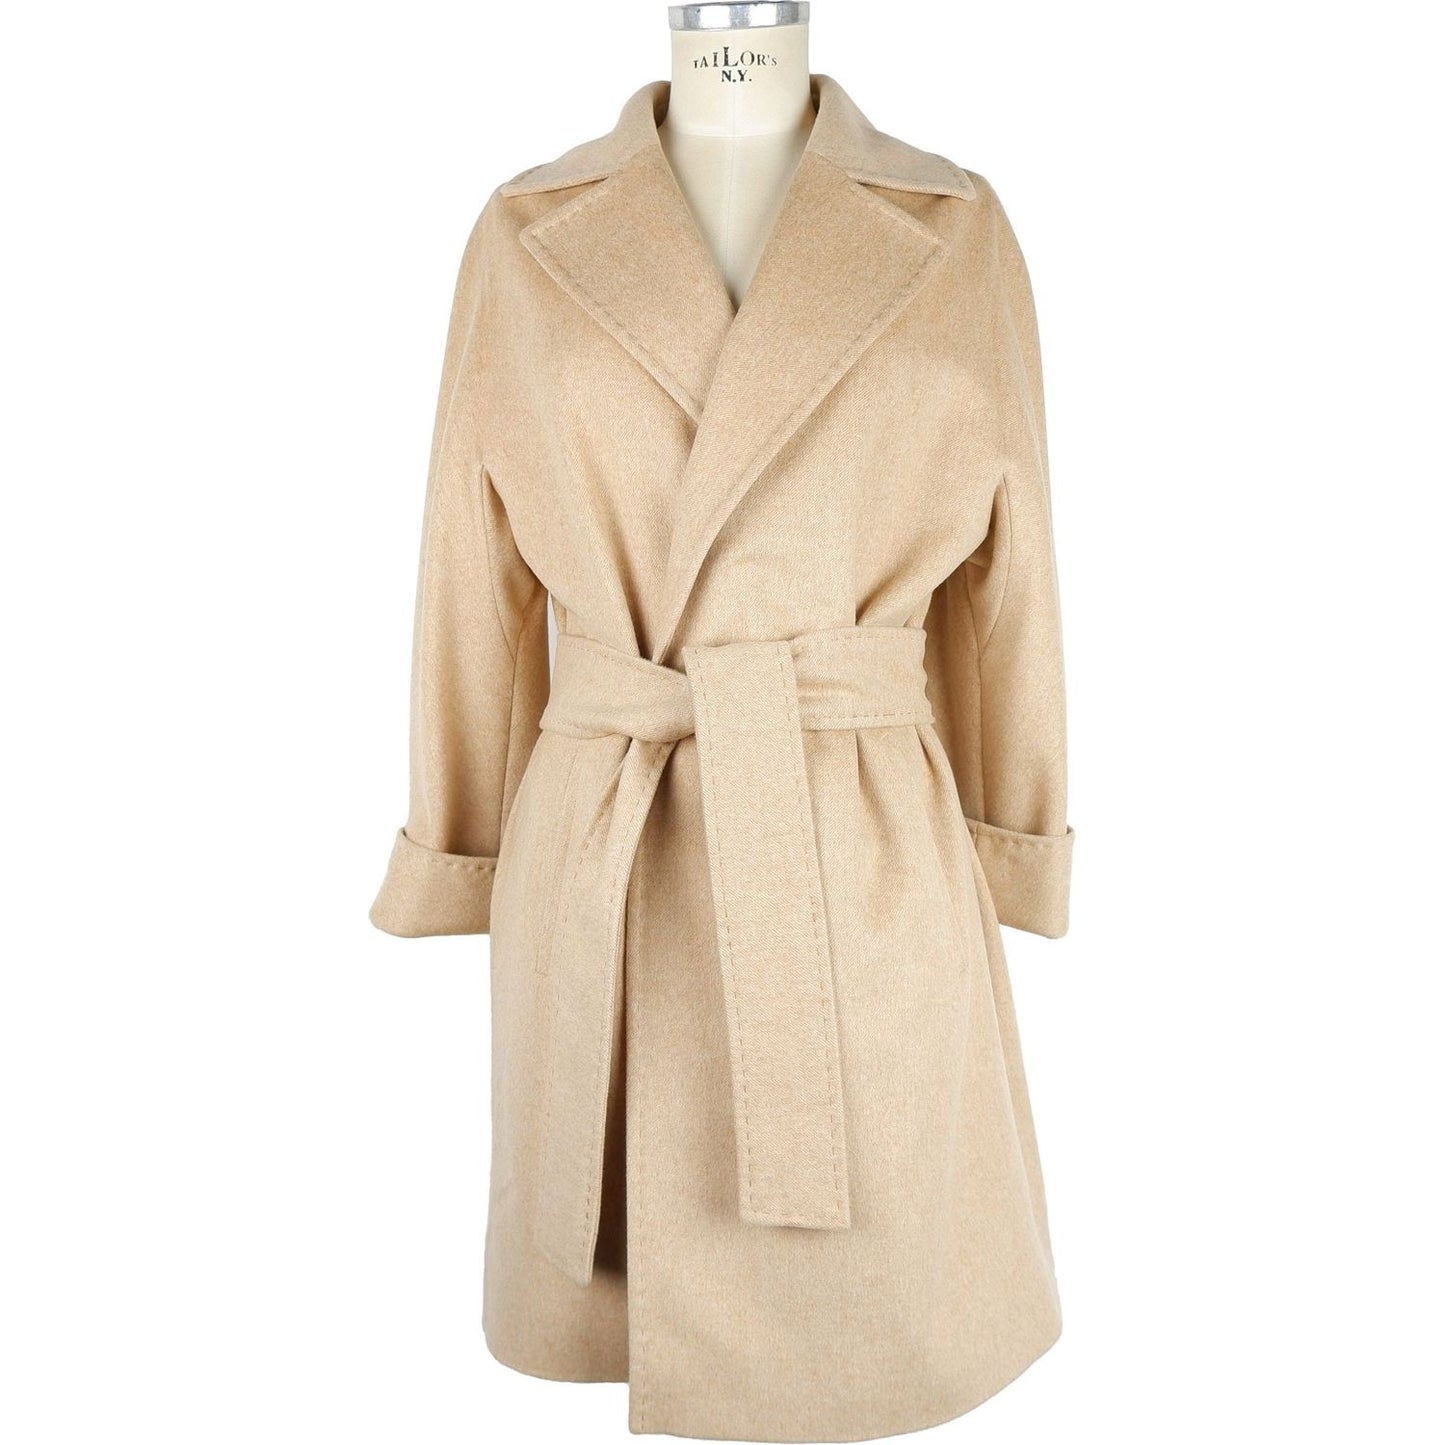 Made in Italy Elegant Beige Wool Coat with Waist Belt beige-vergine-wool-coat